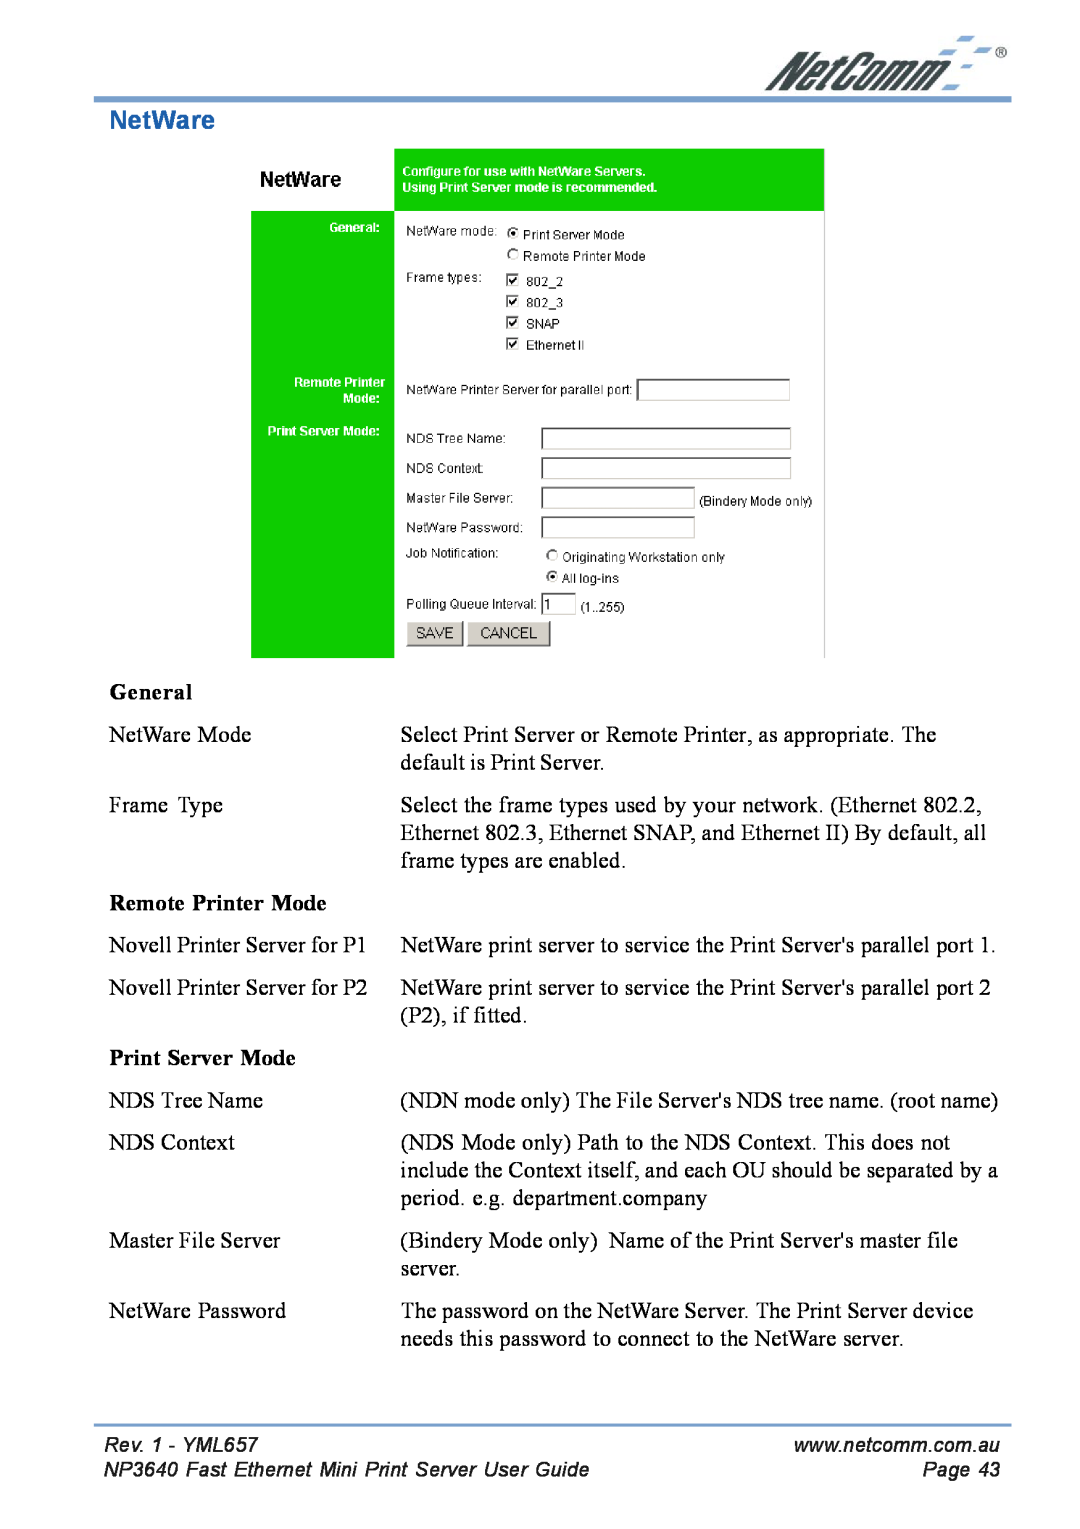 NetComm NP3640 manual General, Remote Printer Mode, Print Server Mode, NetWare 